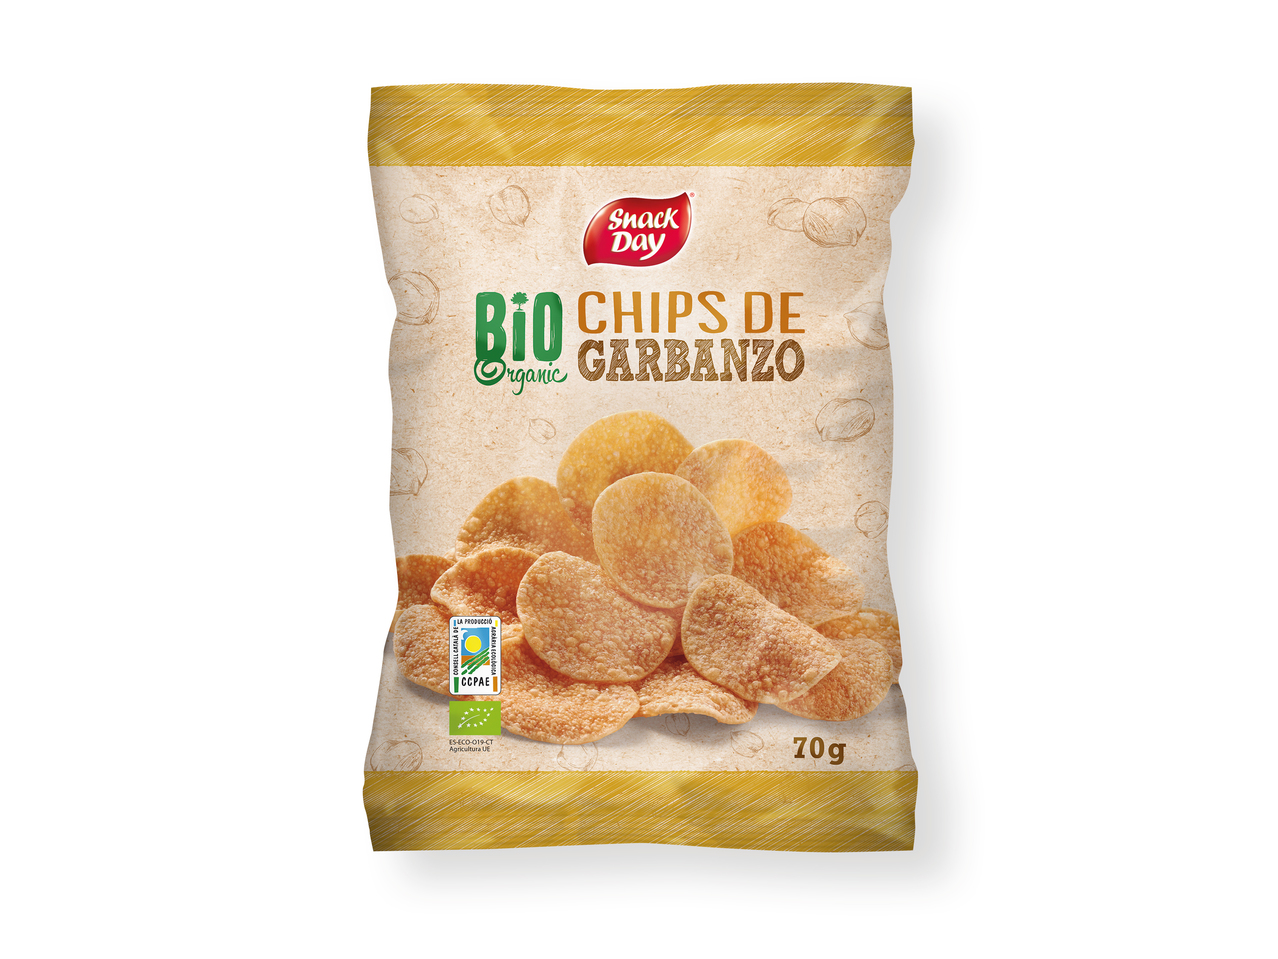 "Snack day" Chips de legumbres ecológicas